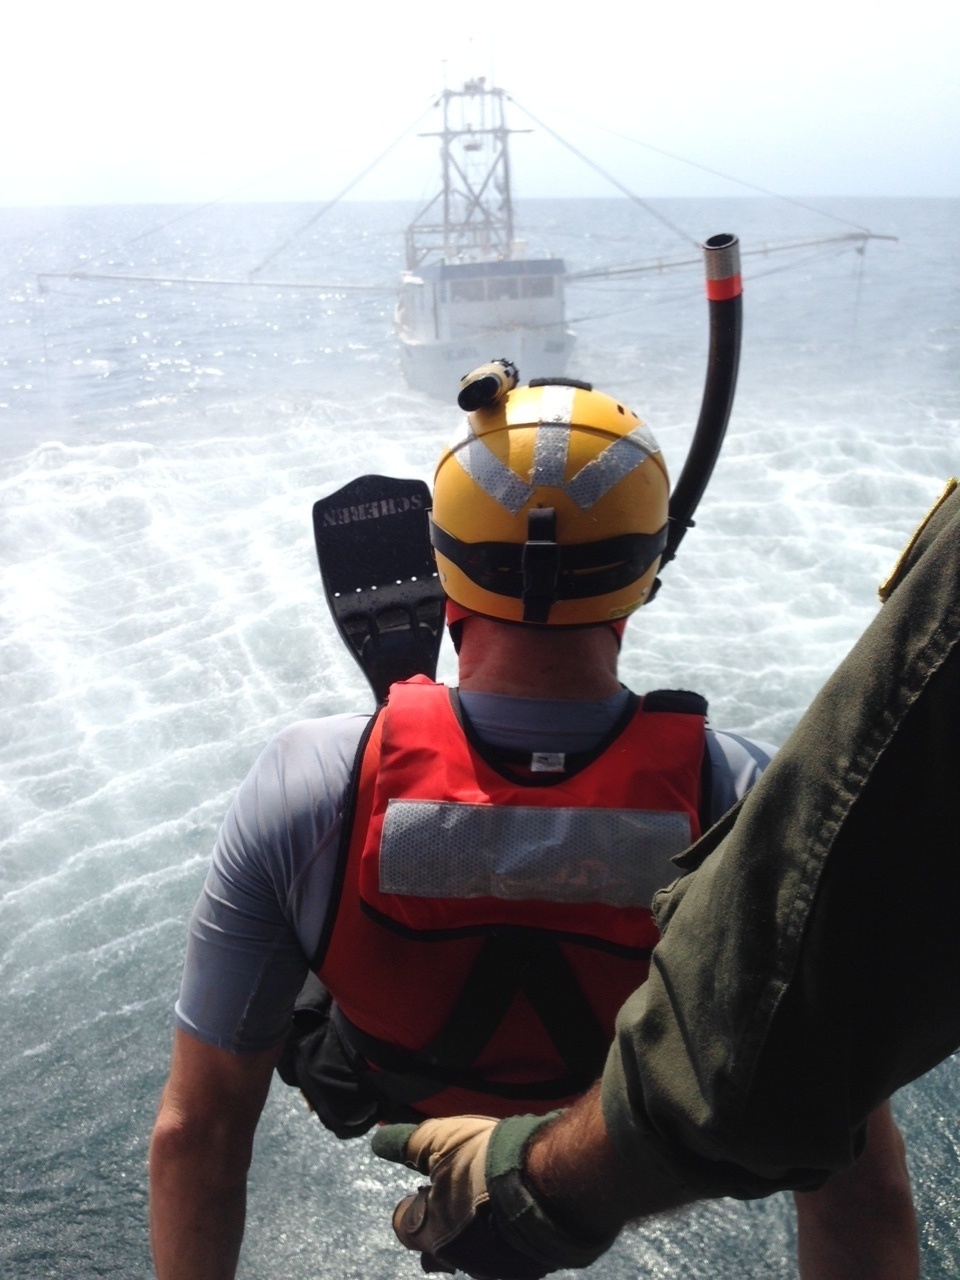 Coast Guard medevacs man 67 miles northeast of Cape Charles, Va.